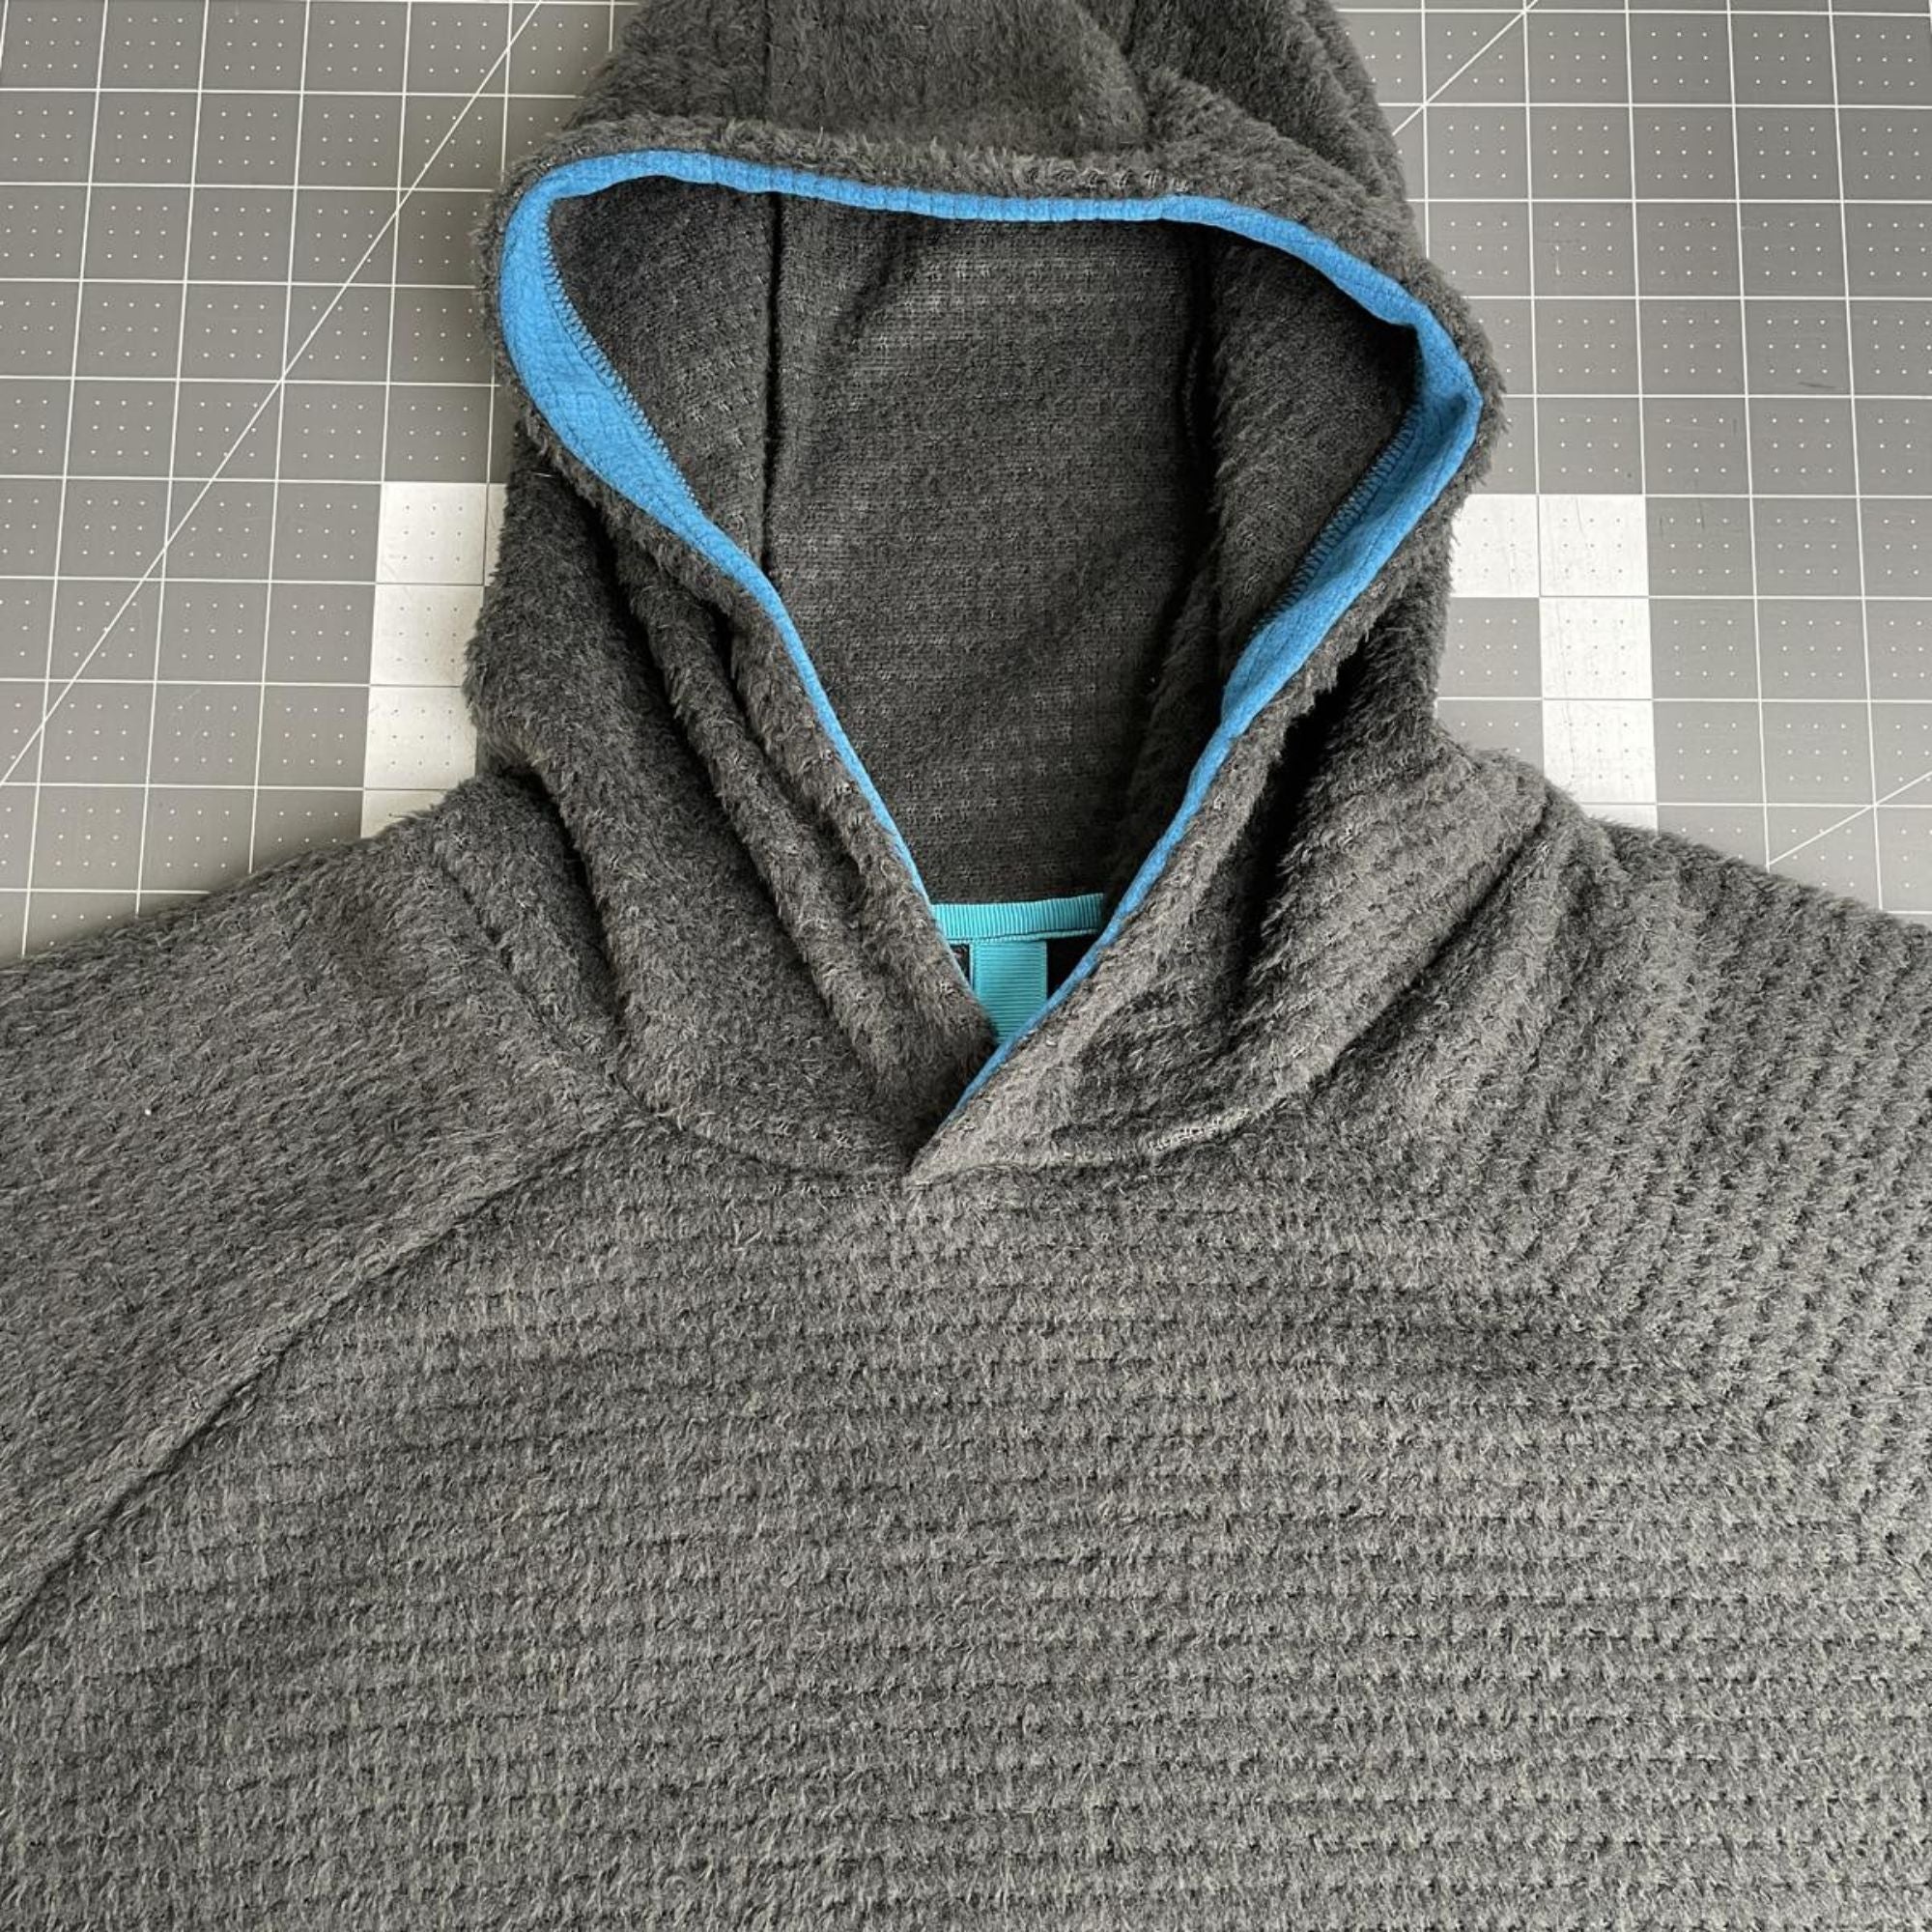 DIY hooded down jacket : r/myog